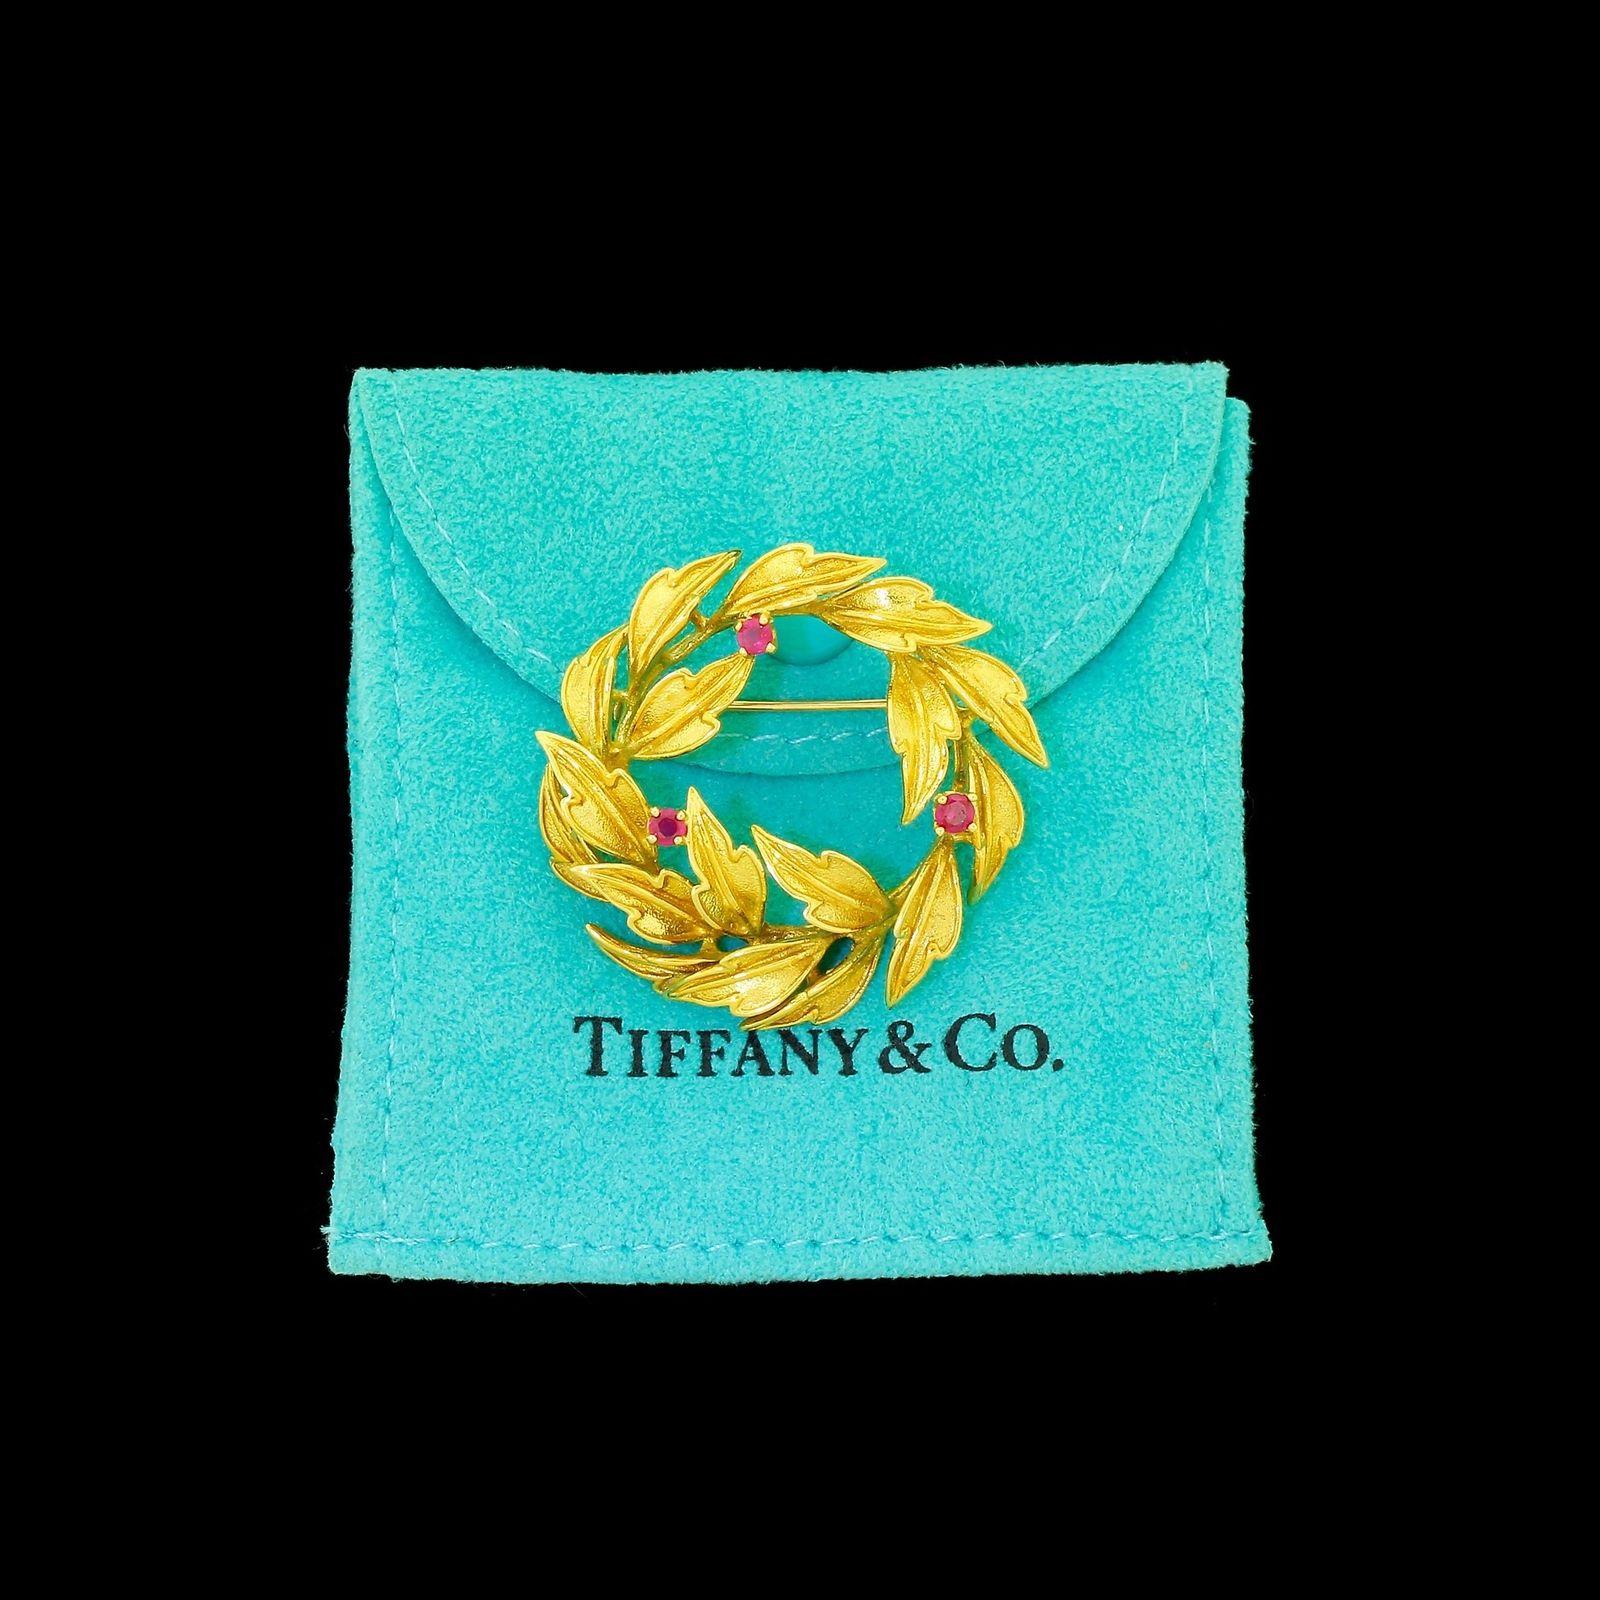 Tiffany & Co. 18 Karat Gold Ruby Leaf Holiday Wreath Pin Brooch Pin 10.75 Grams 2